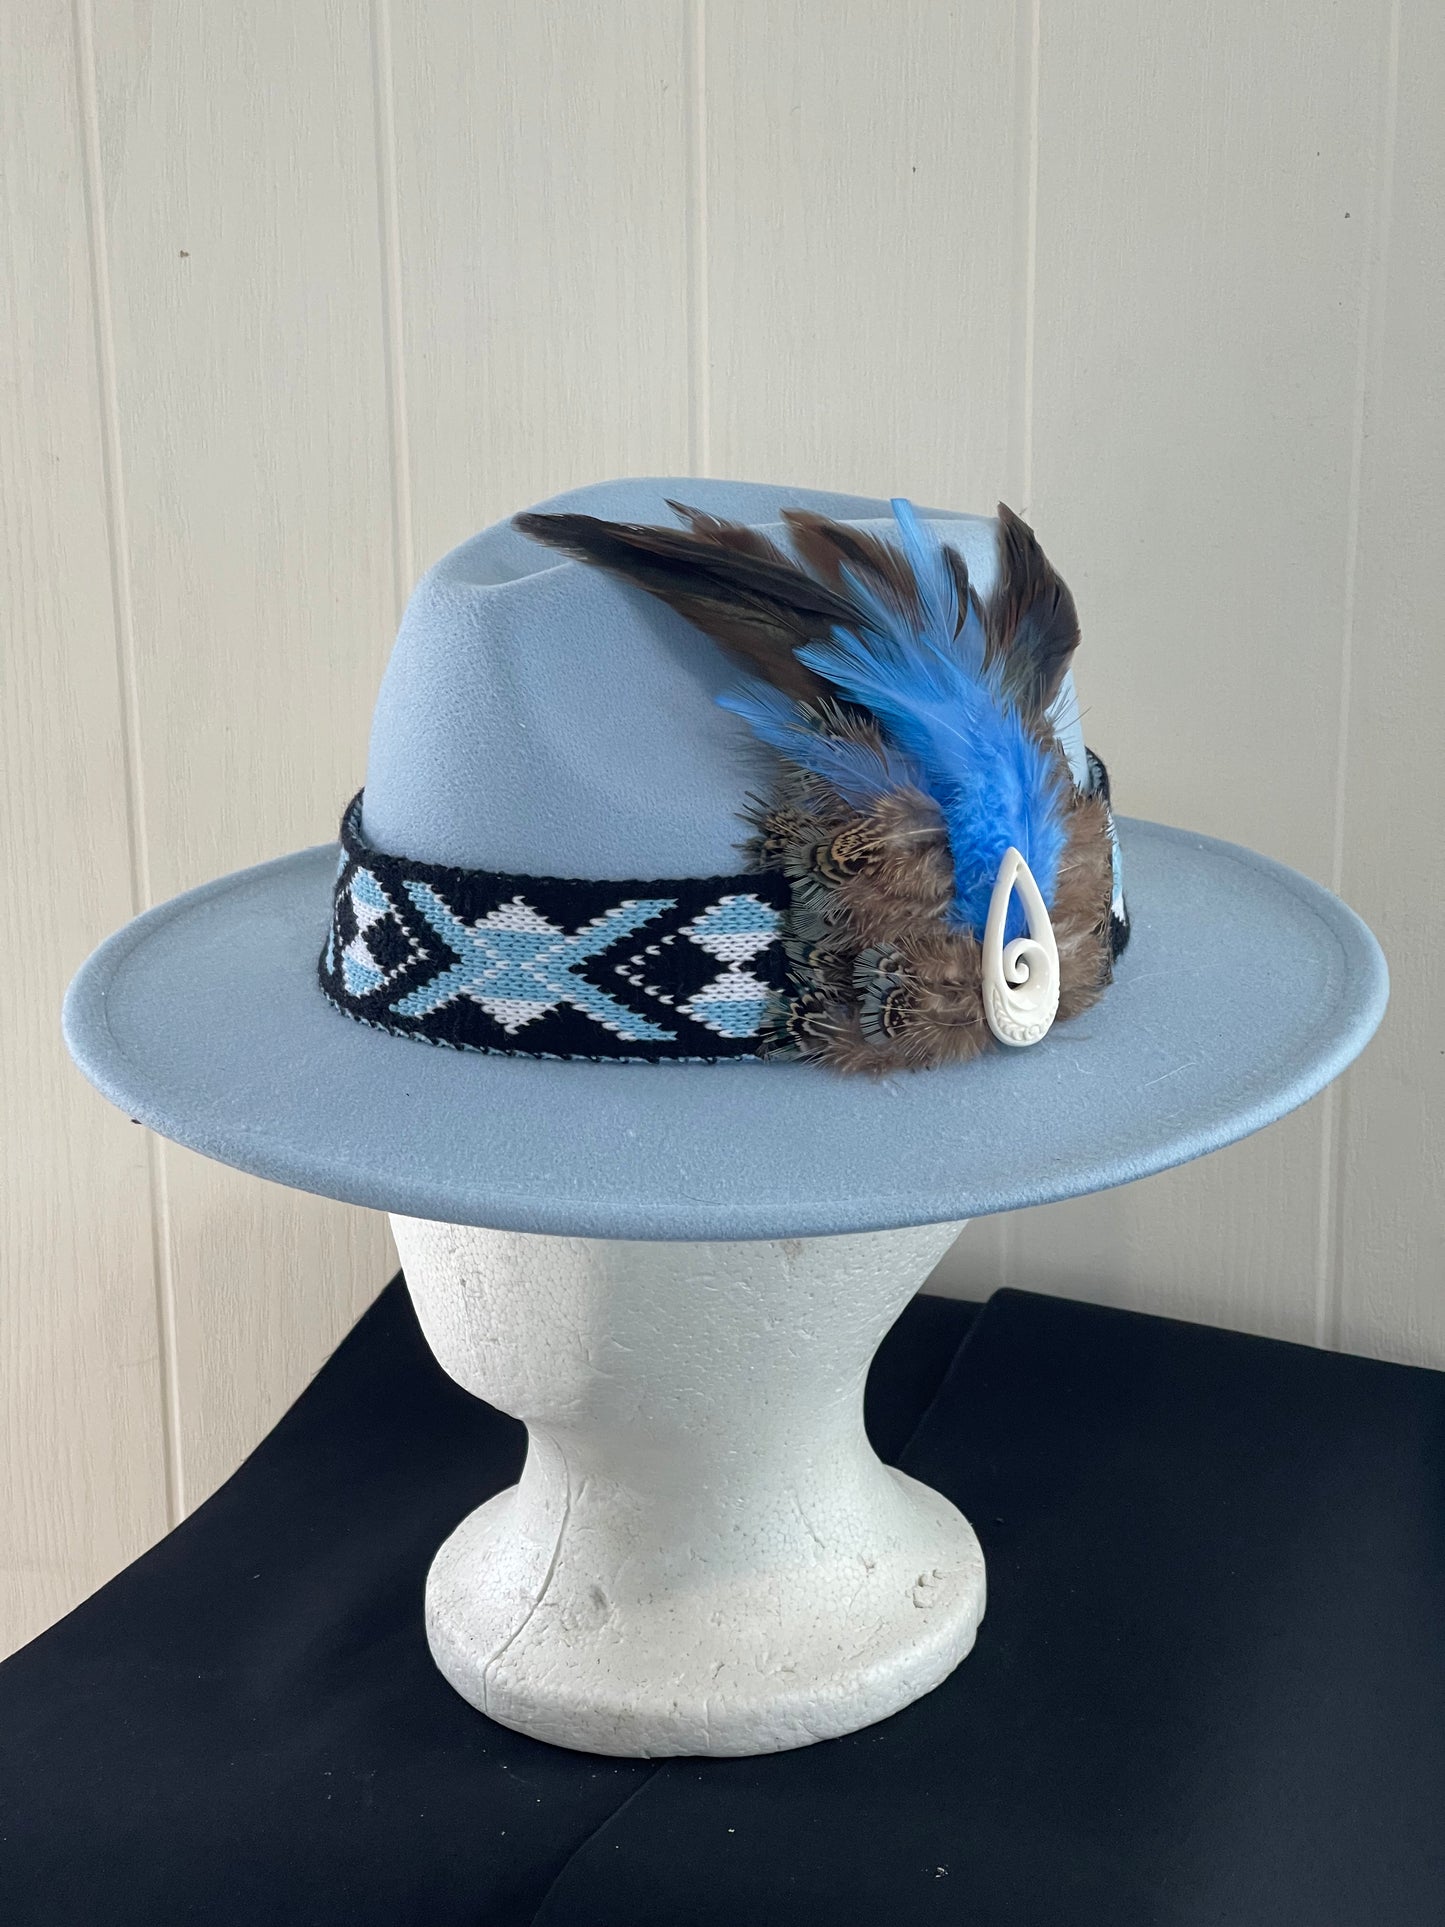 Potae - Pale Blue Fedora Felt Hat